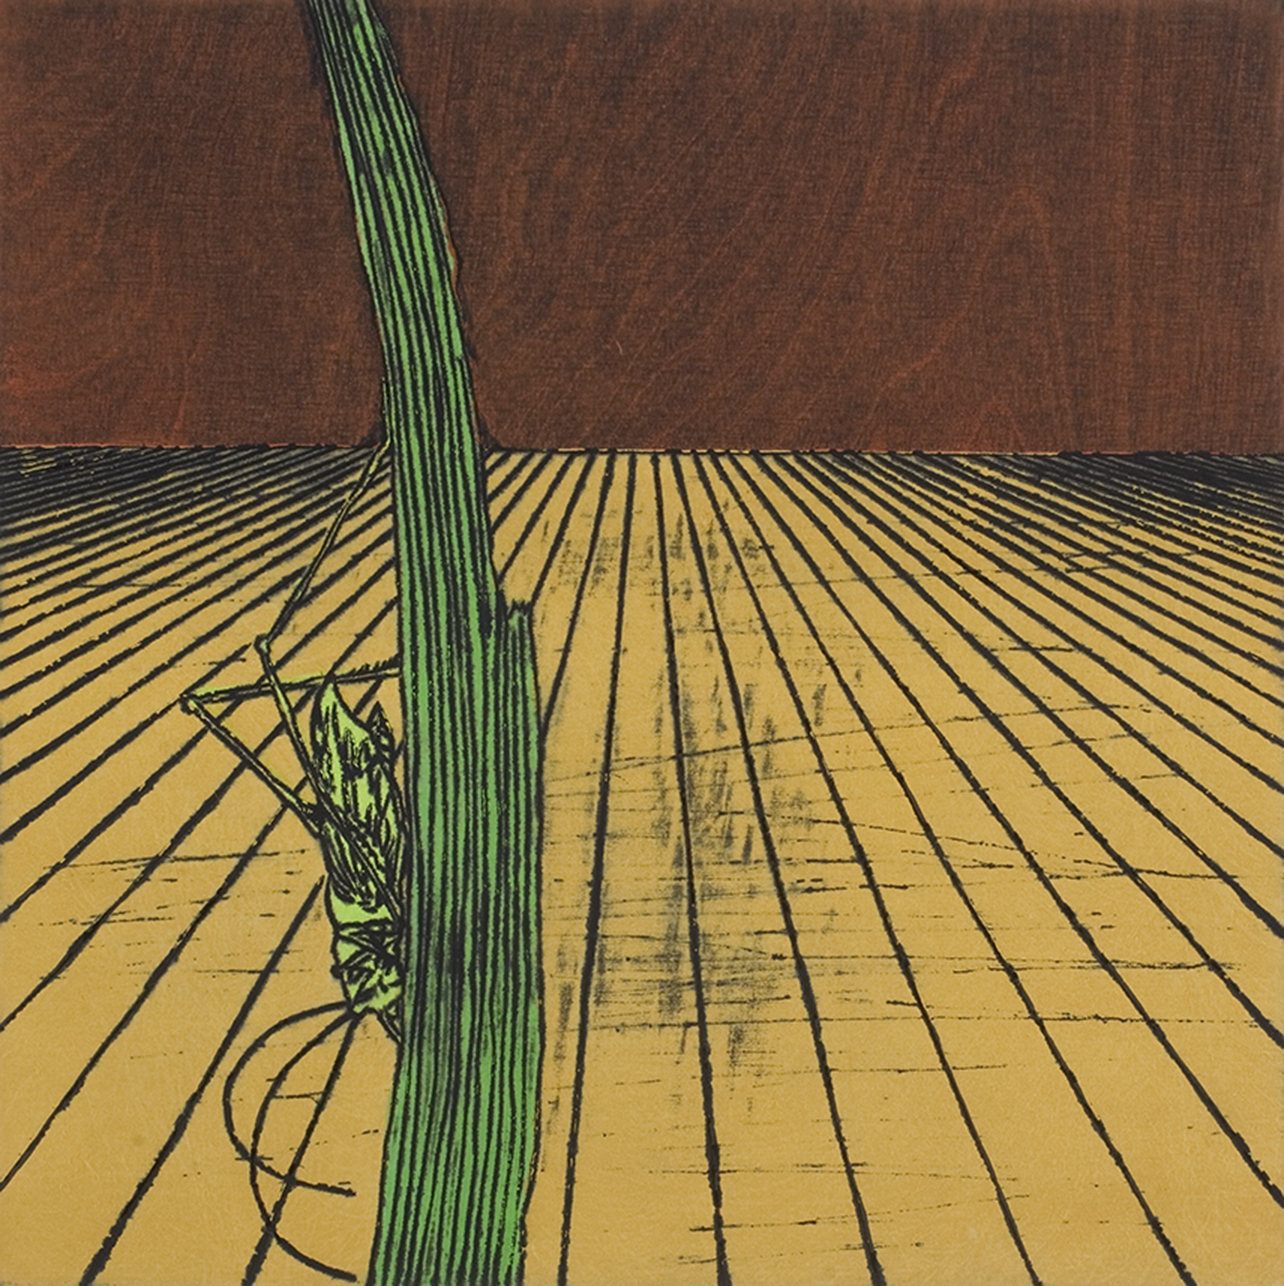 Nana Shiomi - "Mitate No.13 - Solitude", 1999, Woodcut, Ed of 10, Sheet size 46 x 46 cm